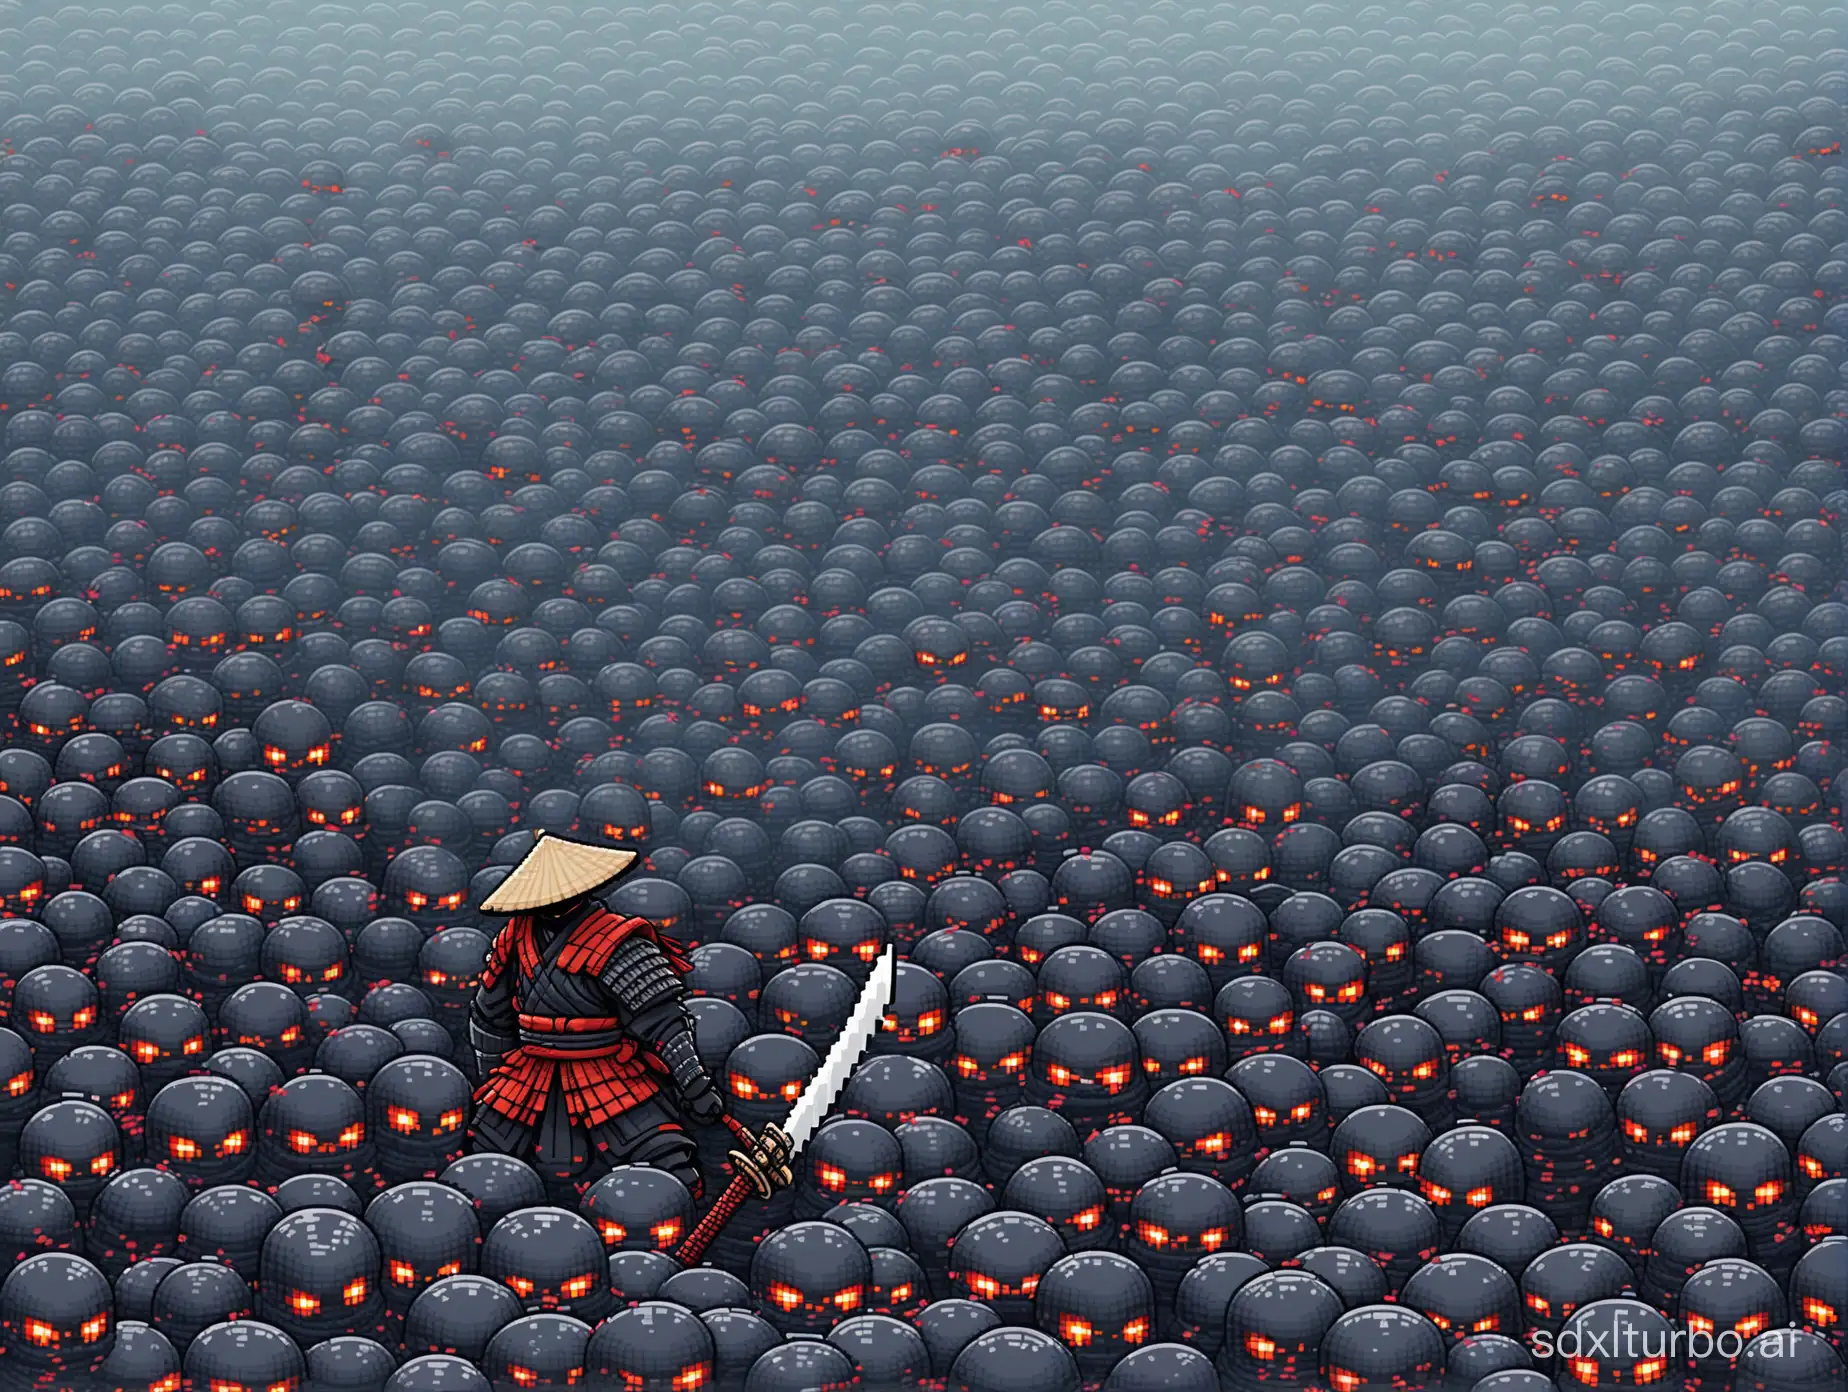 Pixelated-Ronin-Samurai-Sword-Fight-Against-Black-Slime-Swarms